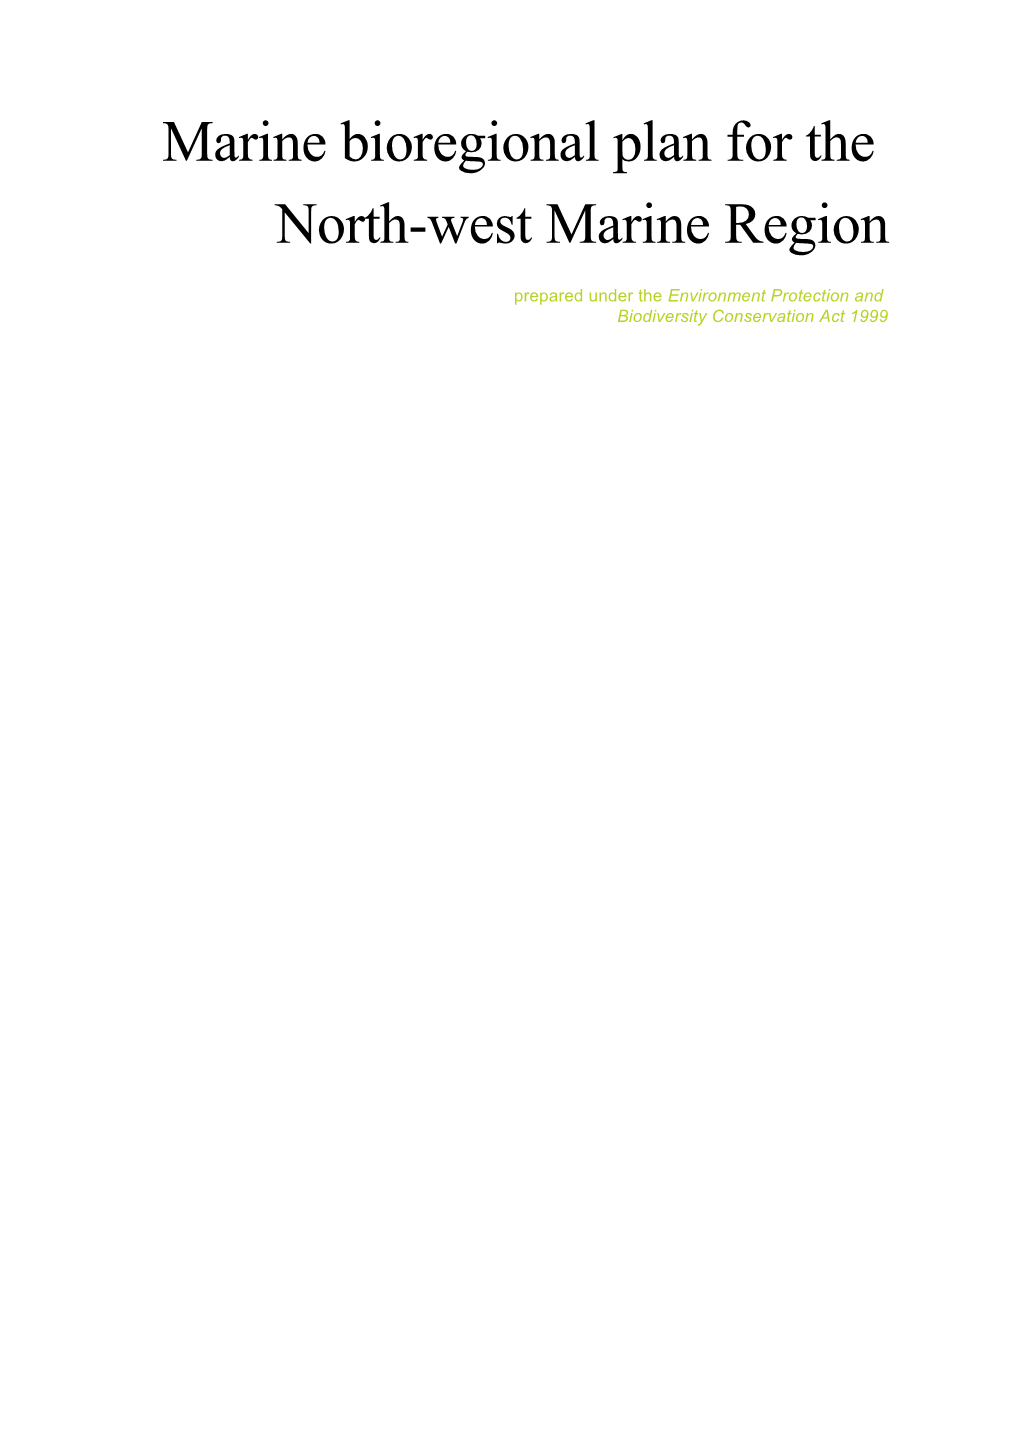 Marine Bioregional Plan for the North-West Marine Region